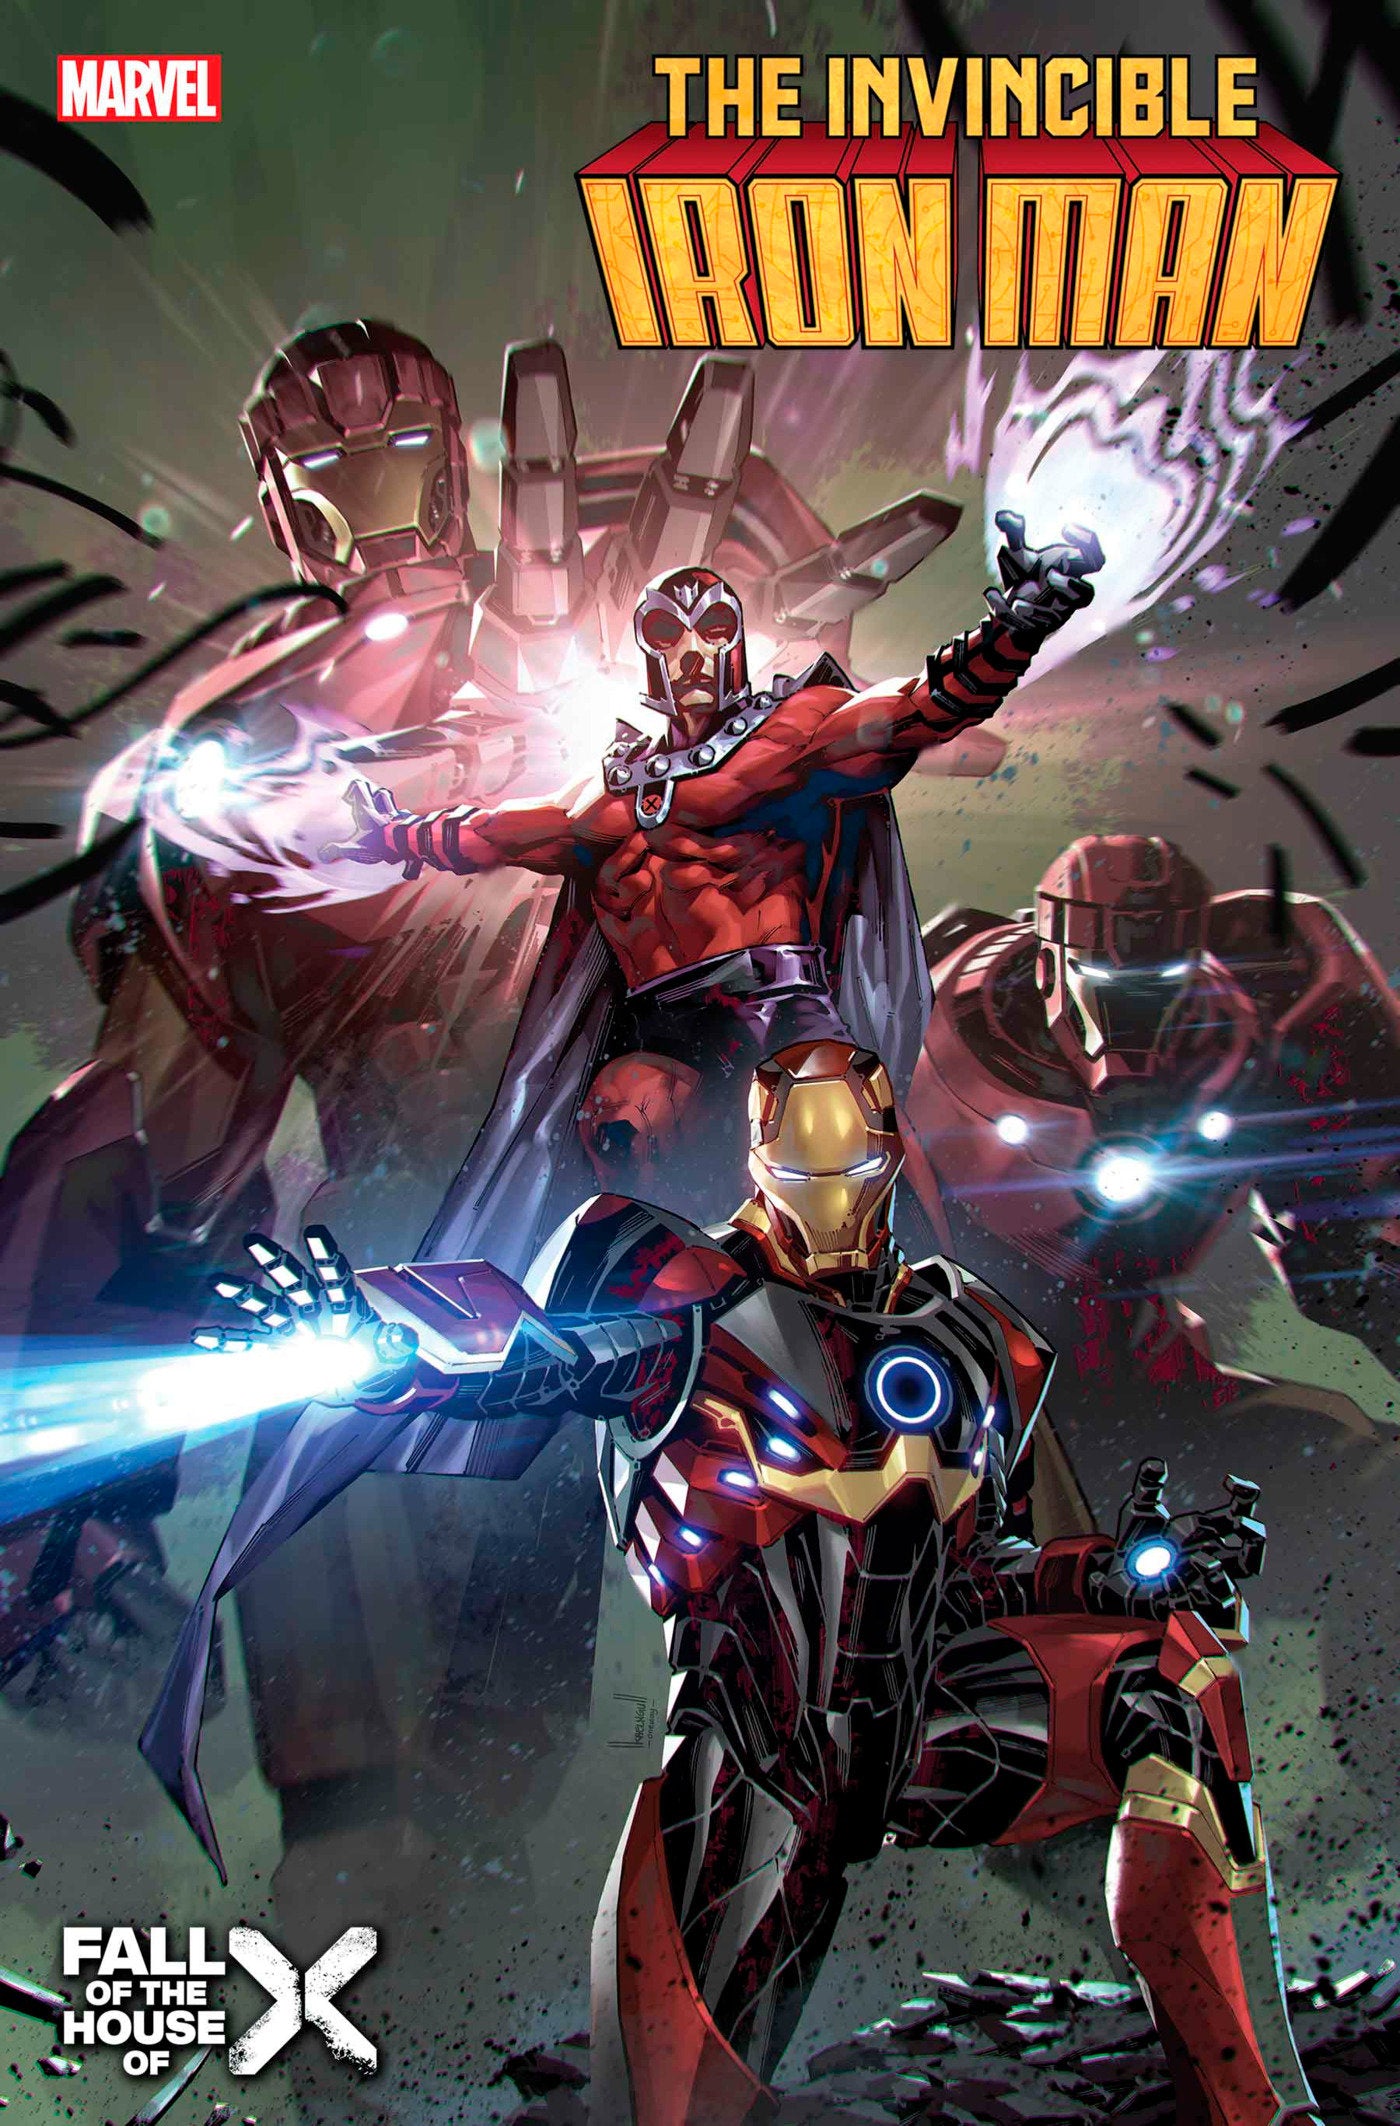 Invincible Iron Man #18 fhx